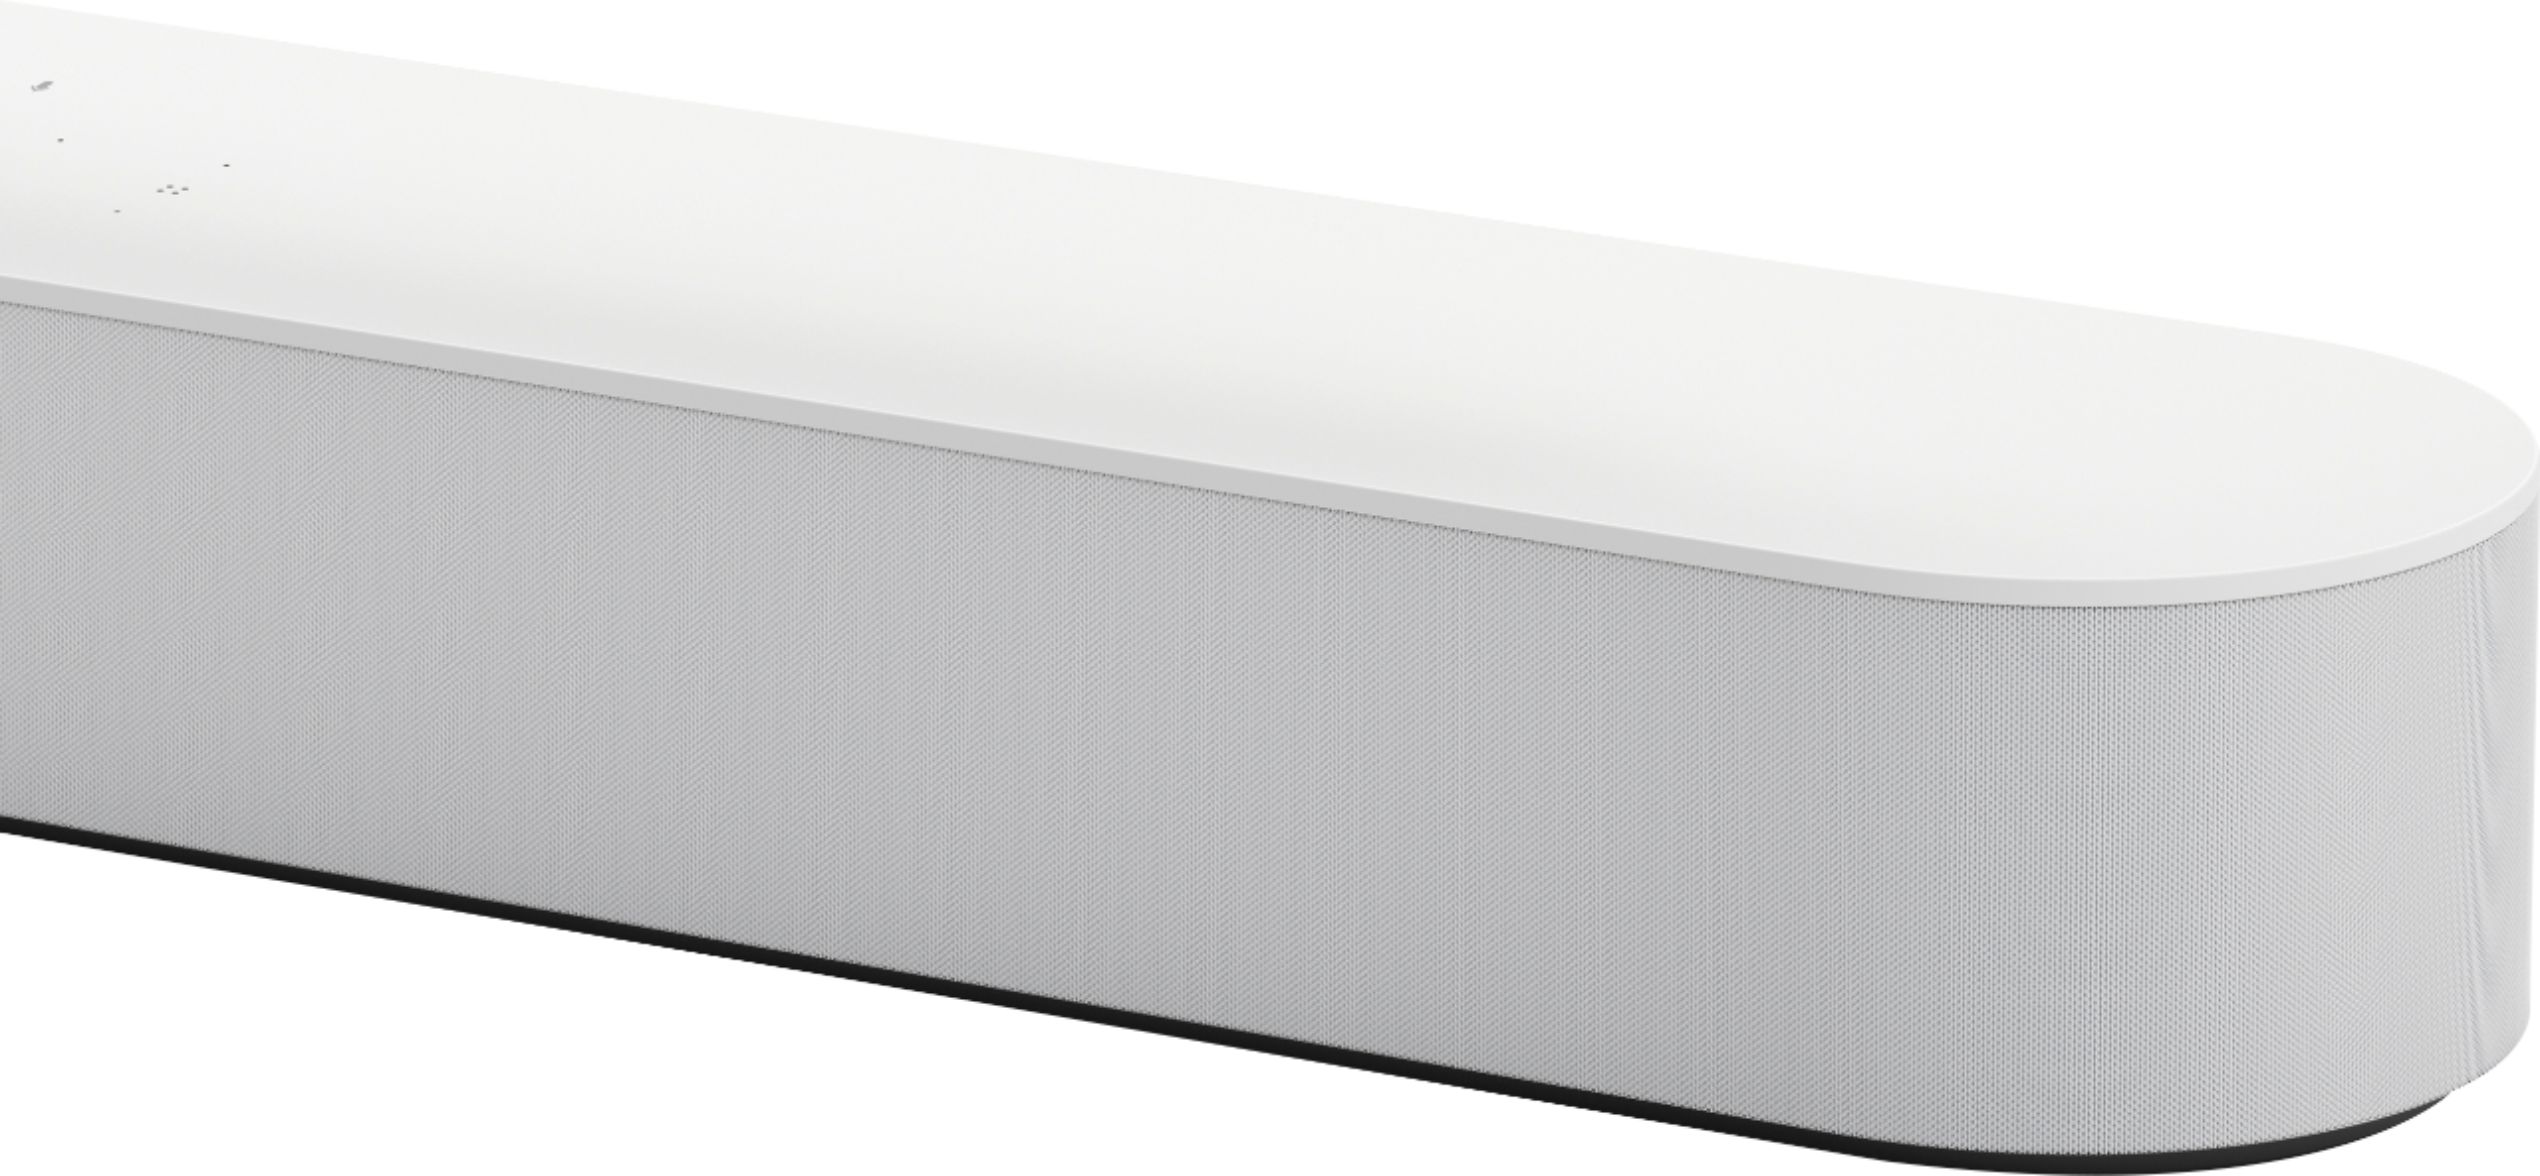 Left View: Sonos - Beam Soundbar with Voice Control built-in - White